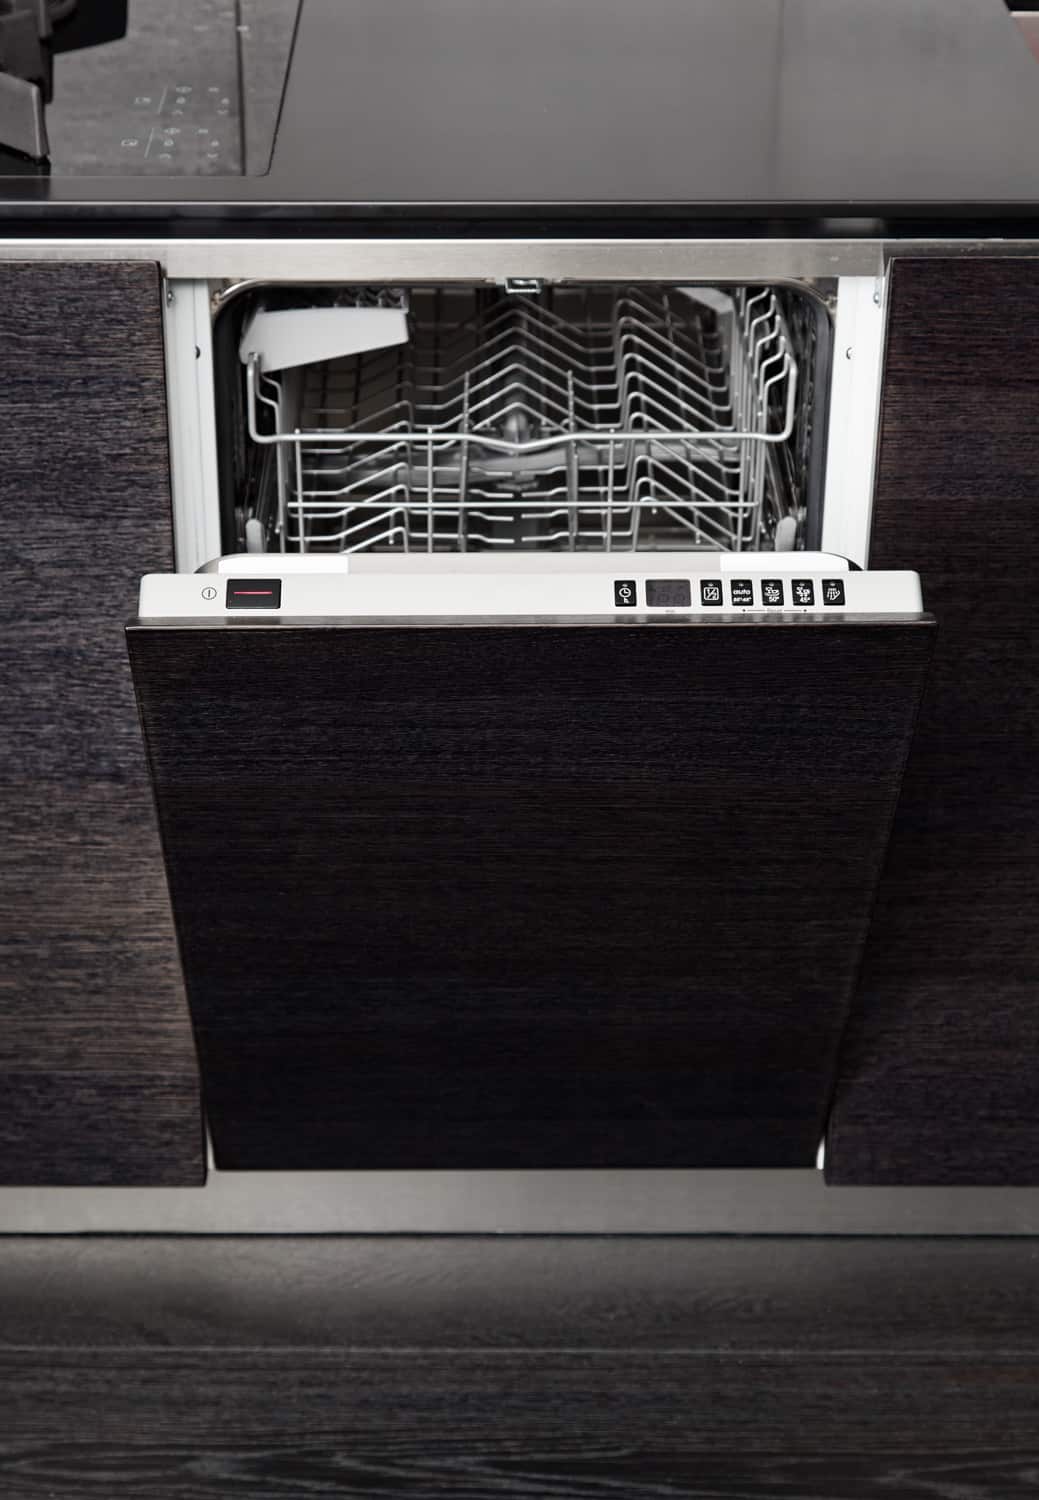 Open GE dish washer machine on black hardwood kitchen